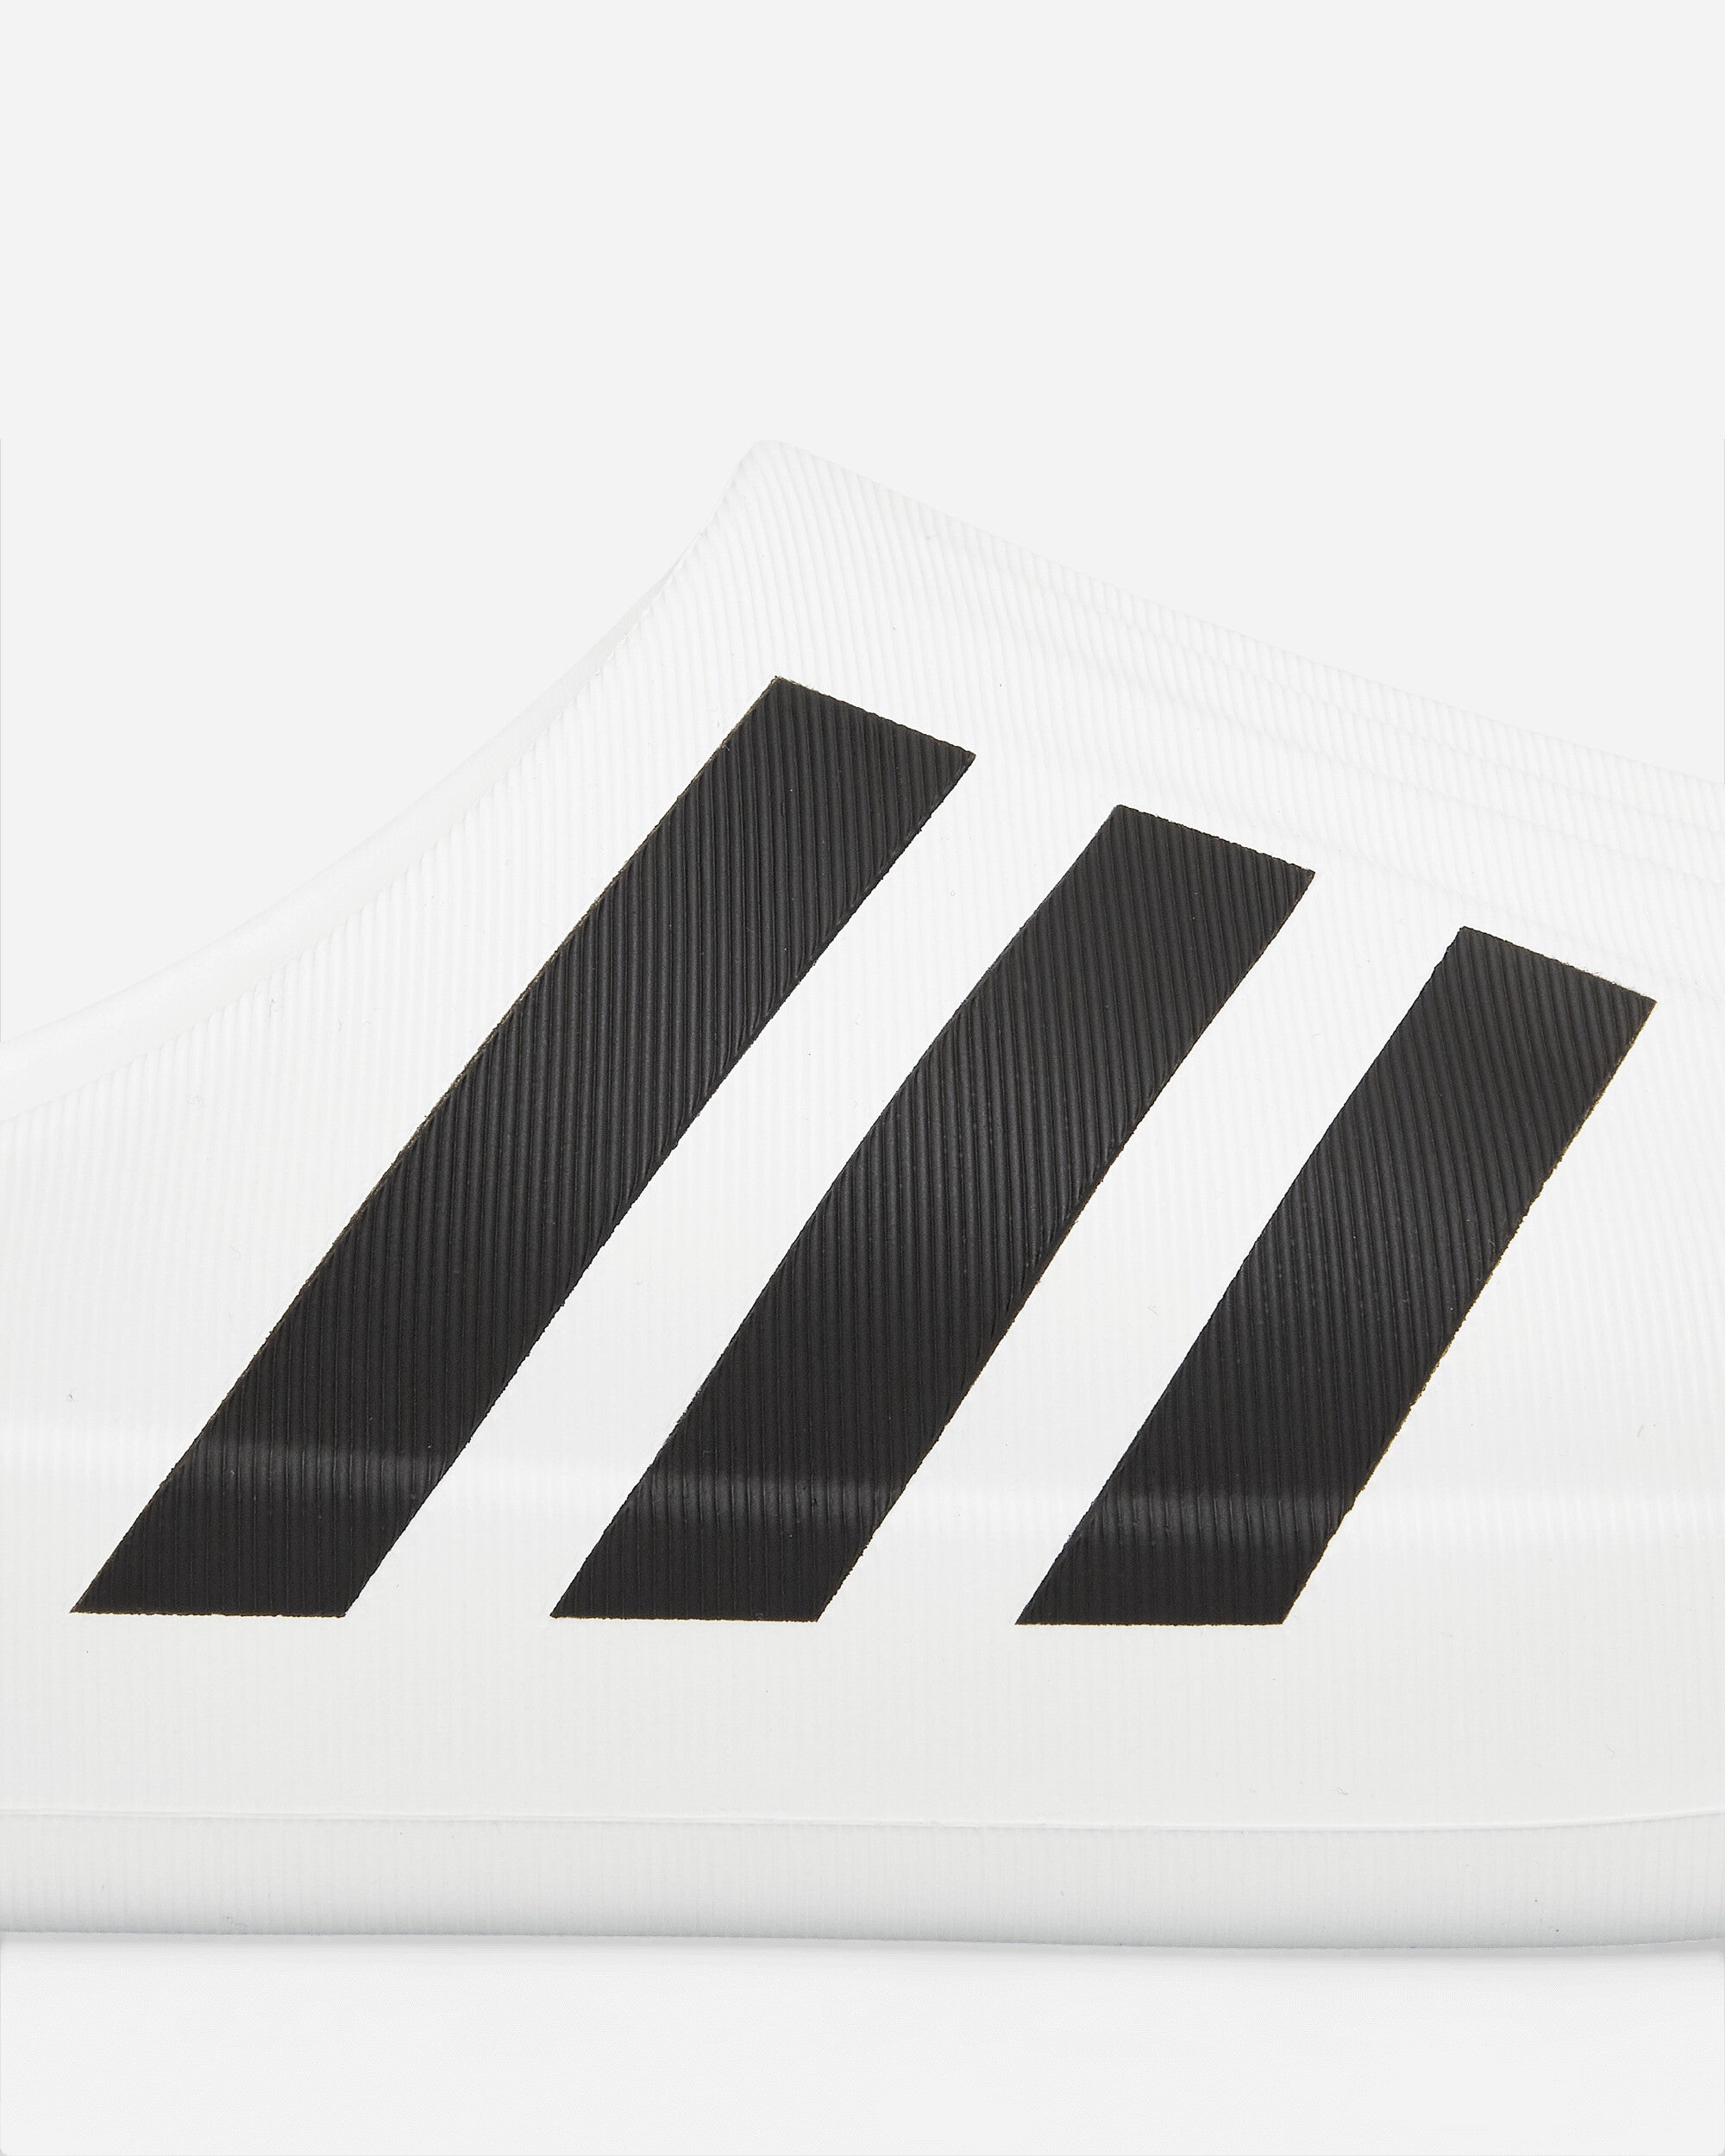 adidas Adifom Superstar Mule Ftwr White/Core Black Sandals and Slides Slides IF6184 001